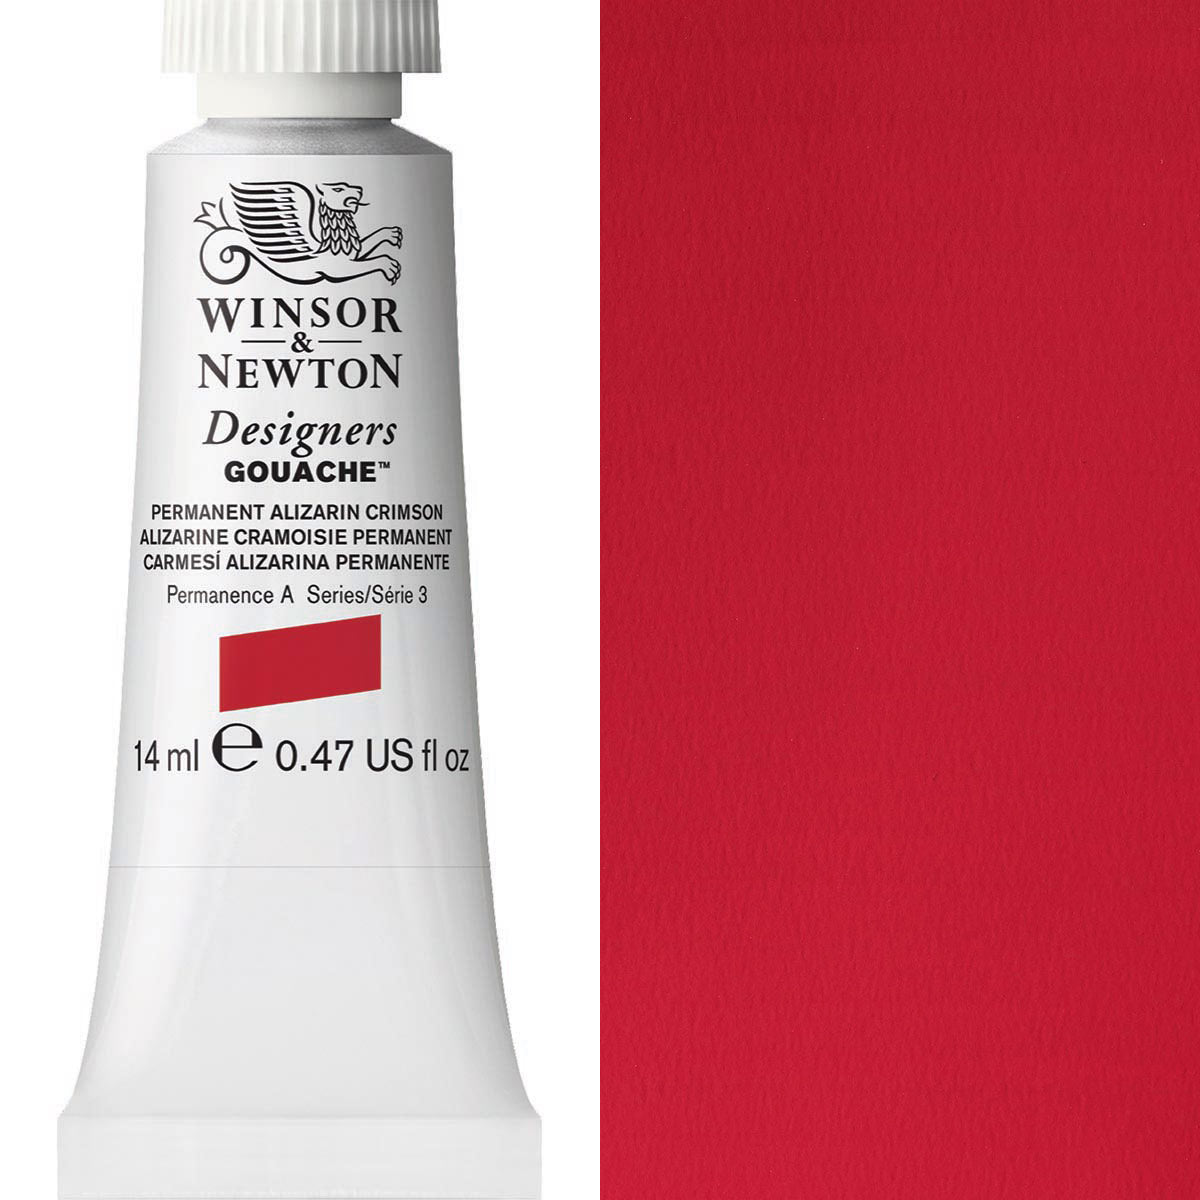 Winsor e Newton - designer Gouache - 14ml - Alizarin Crimson permanente